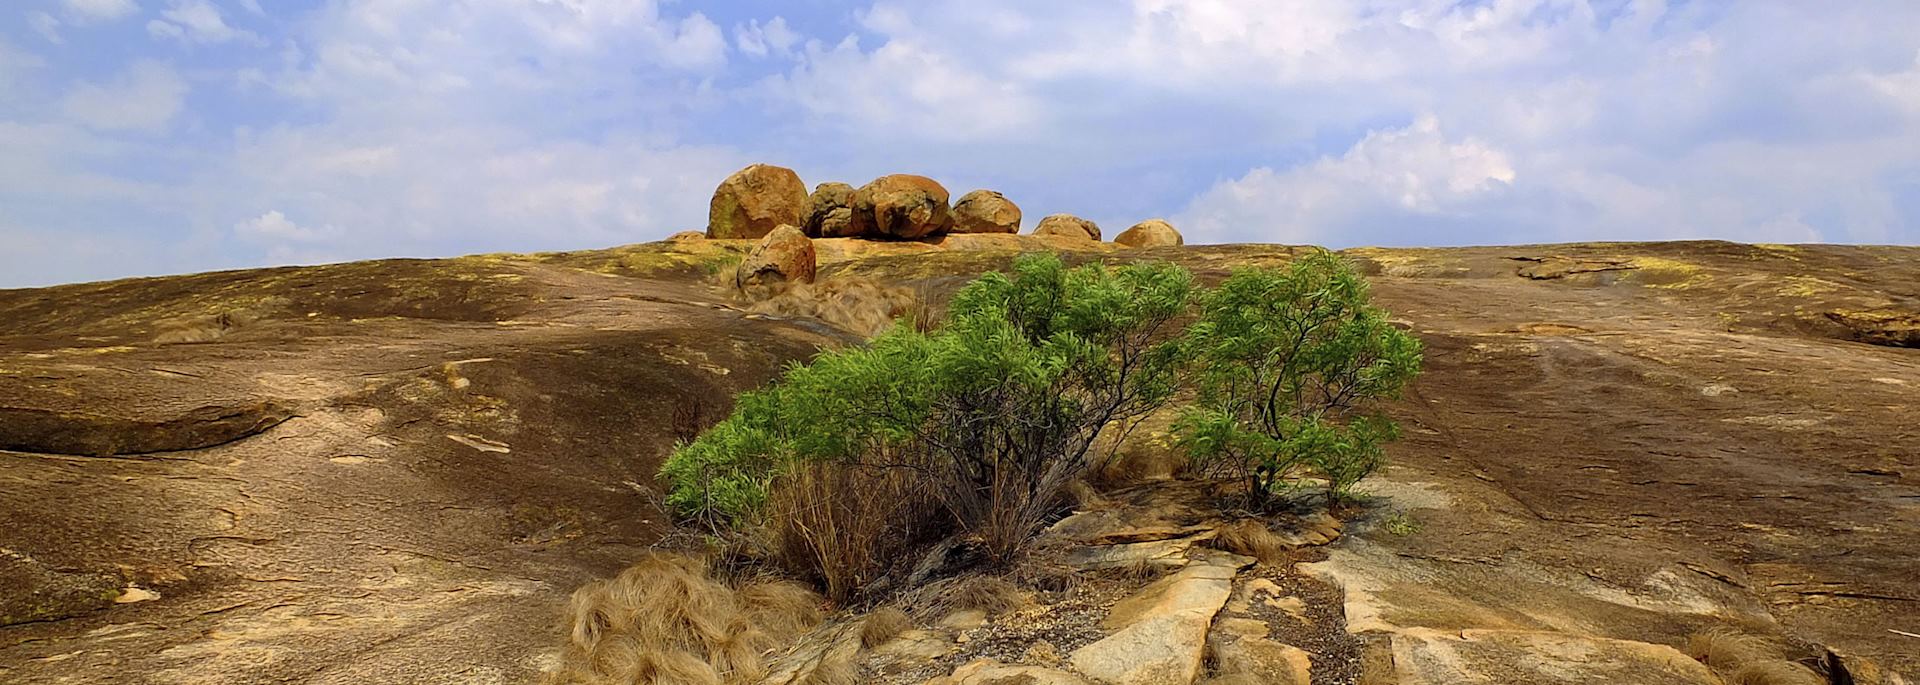 Balancing rocks in the Matobo Hills